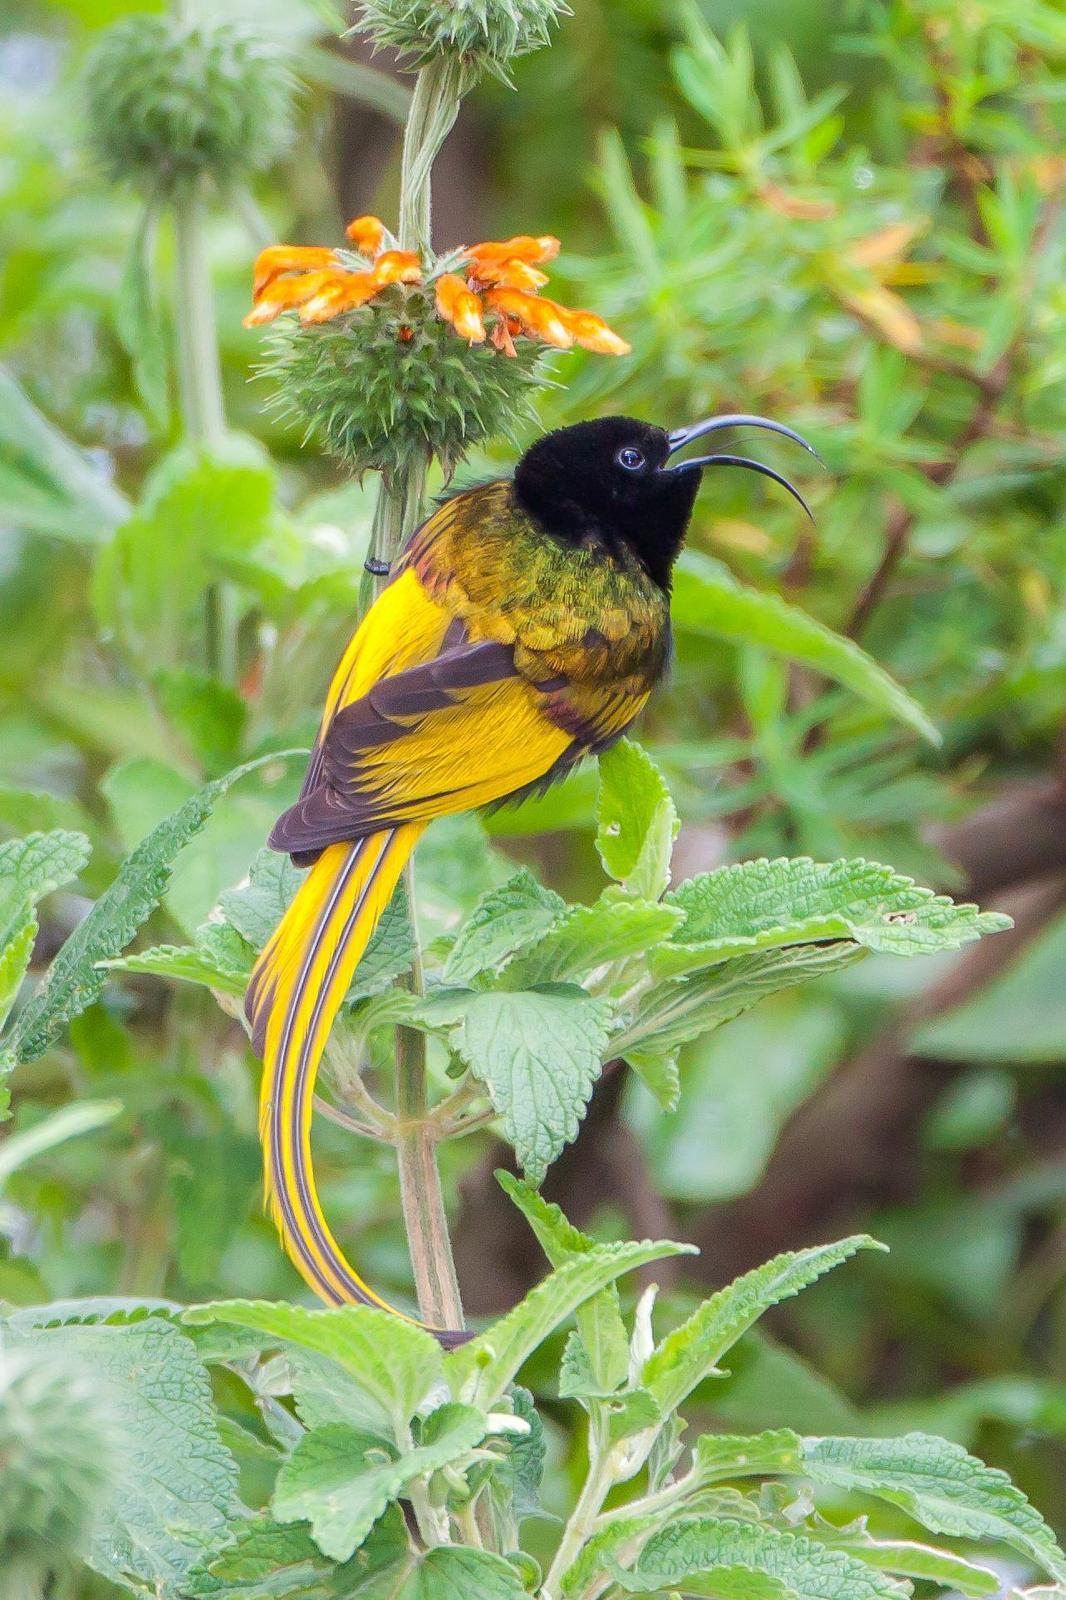 Golden-winged Sunbird Photo by David Leonard